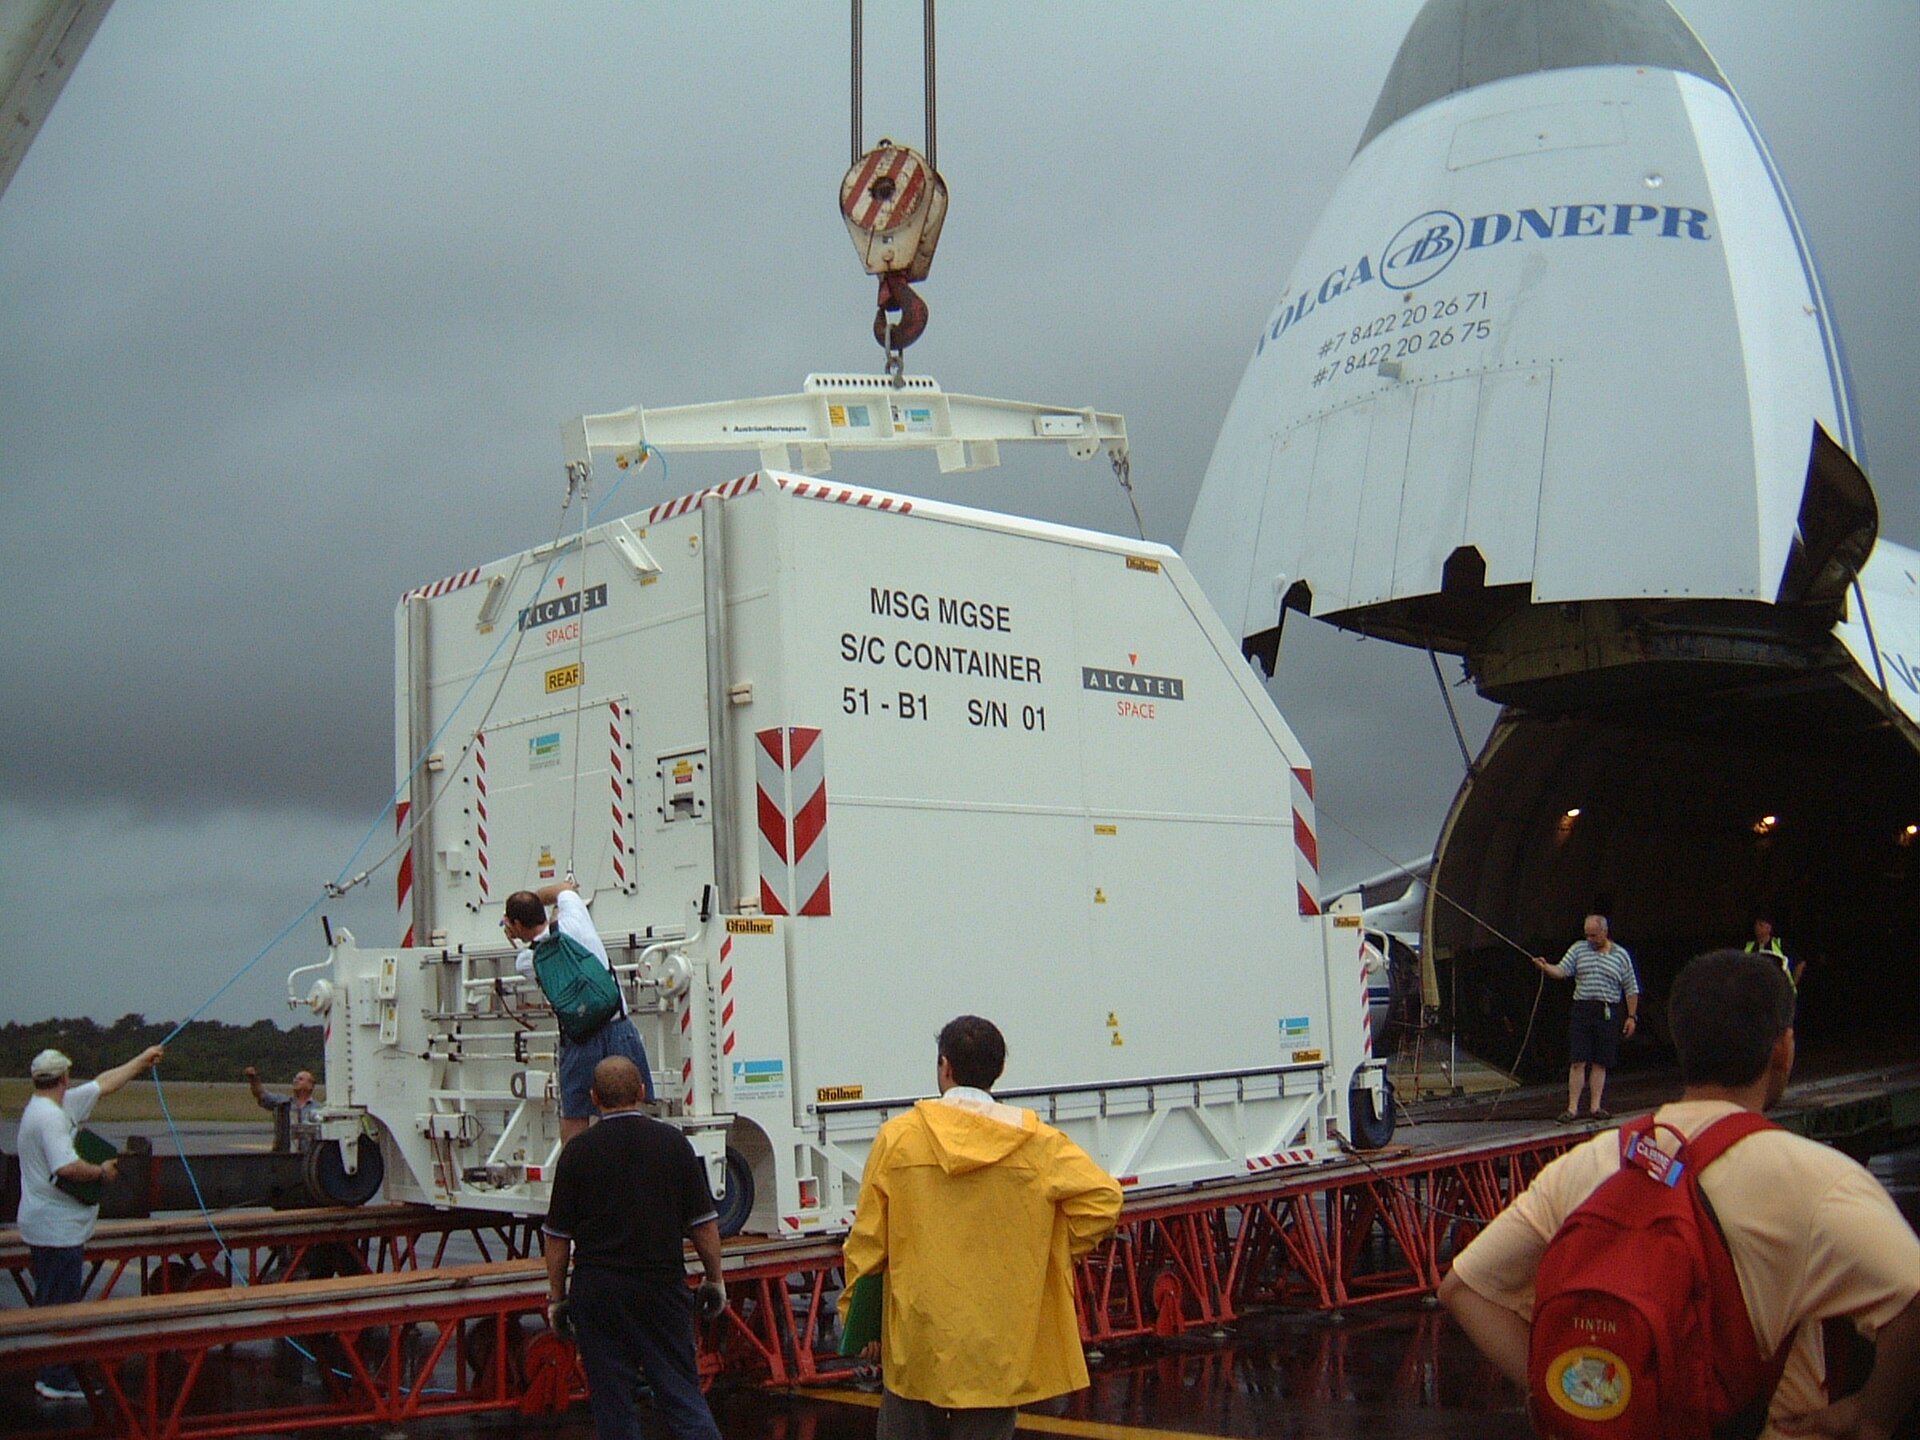 The new European meteorological satellite Meteosat Second Generation unloaded in Kourou, French Guiana